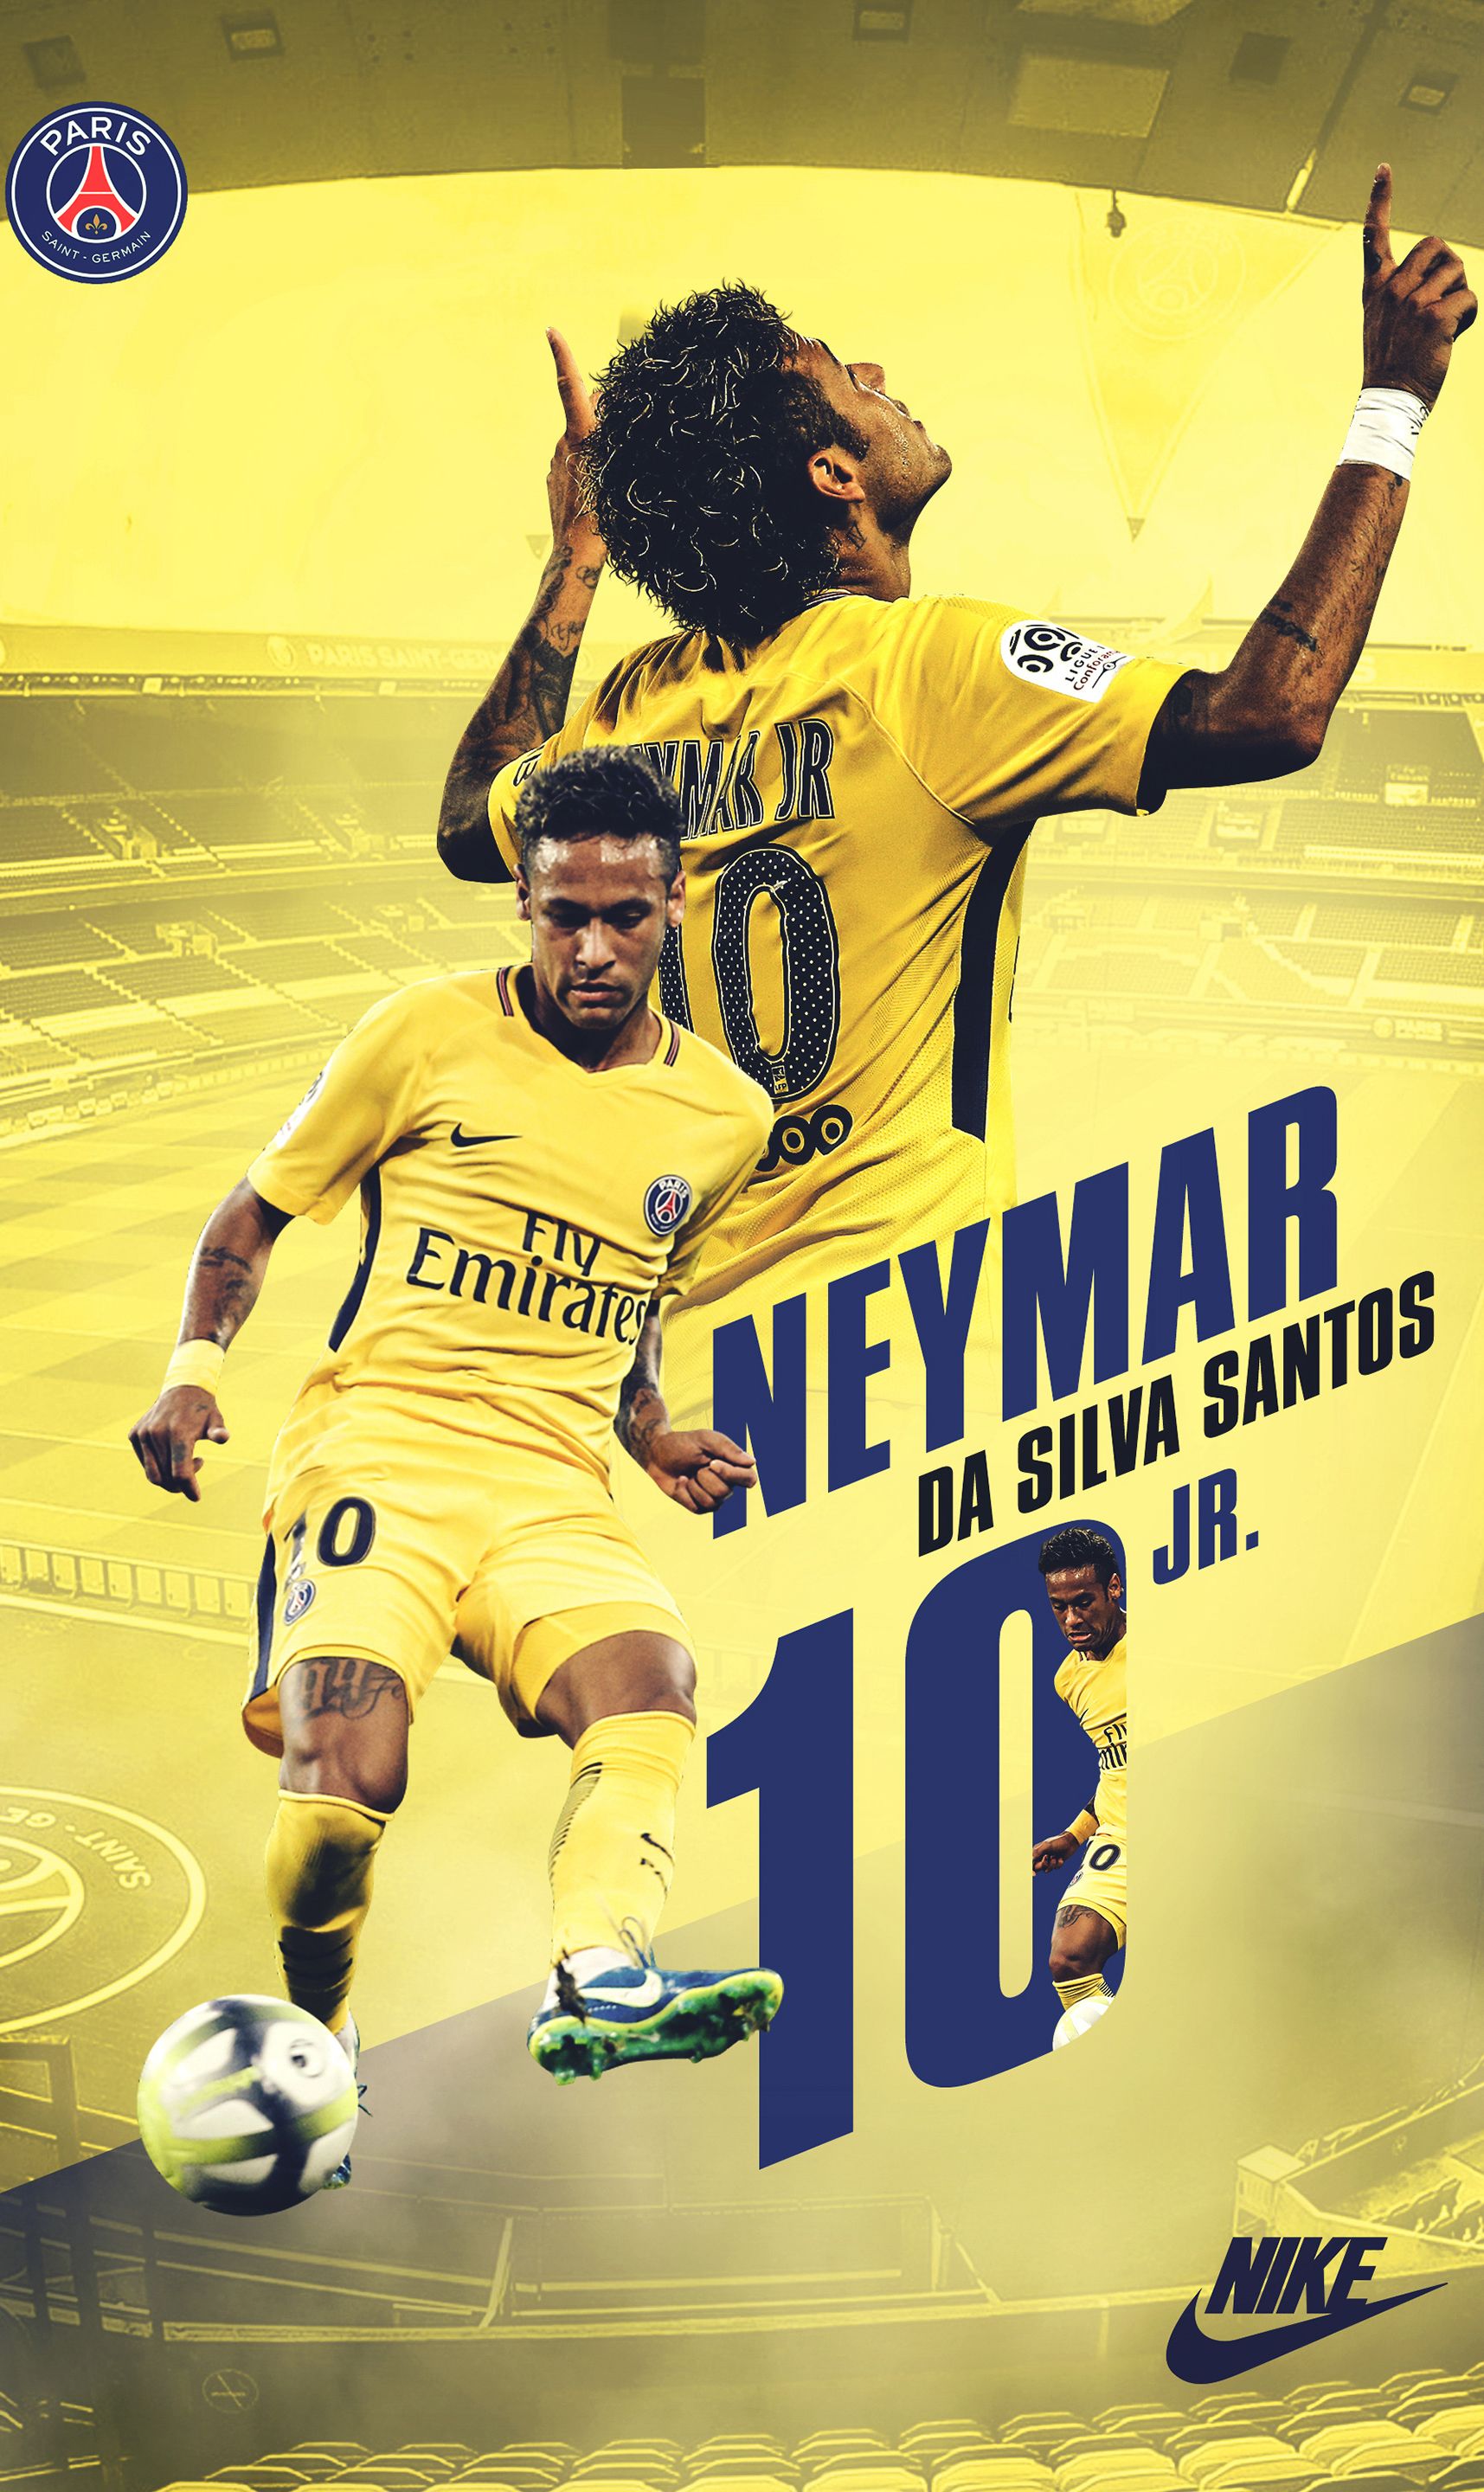 Neymar Mobile HD Wallpaper. Neymar jr, Neymar, Neymar jr wallpaper